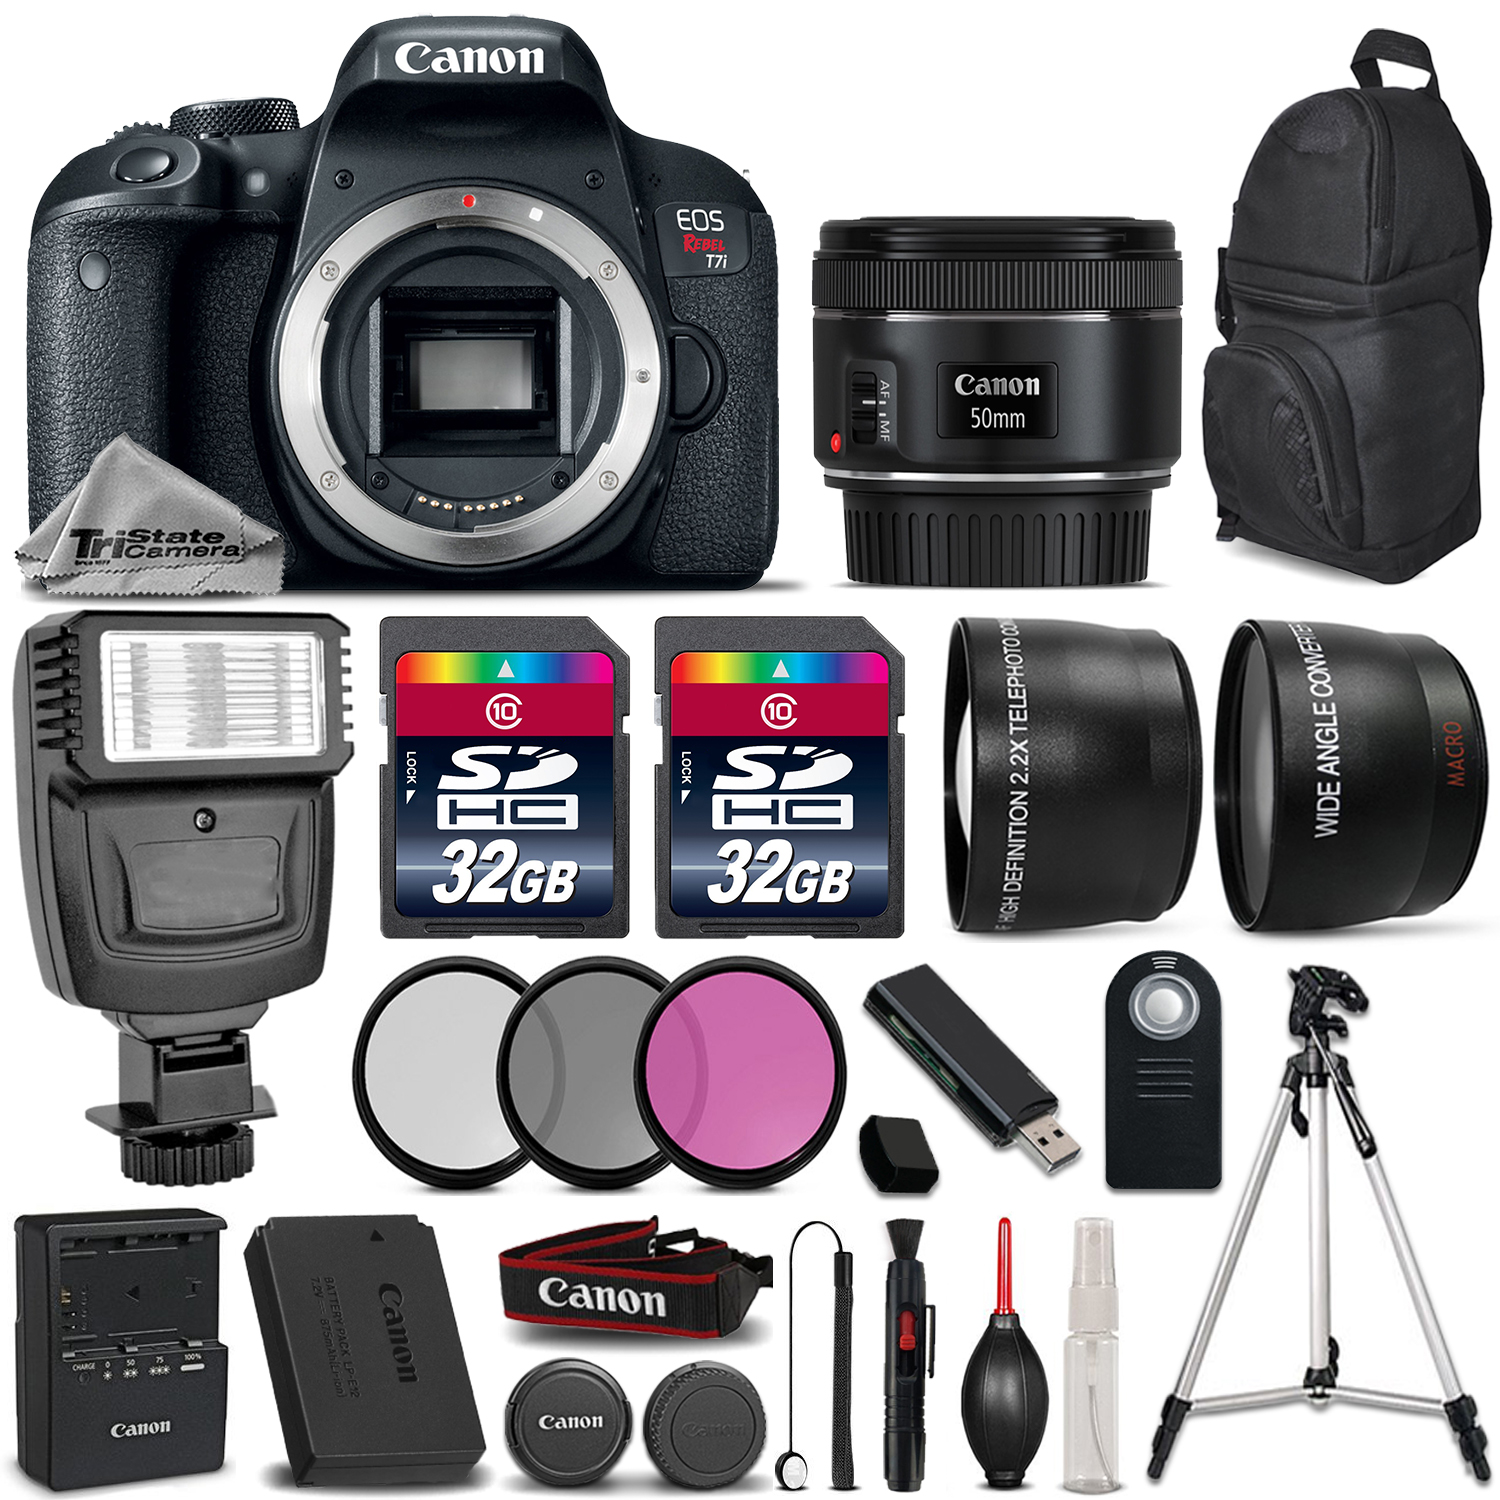 EOS Rebel T7i Camera 800D + 50mm 1.8  + Flash + 64GB + Filter Kit & MORE! *FREE SHIPPING*